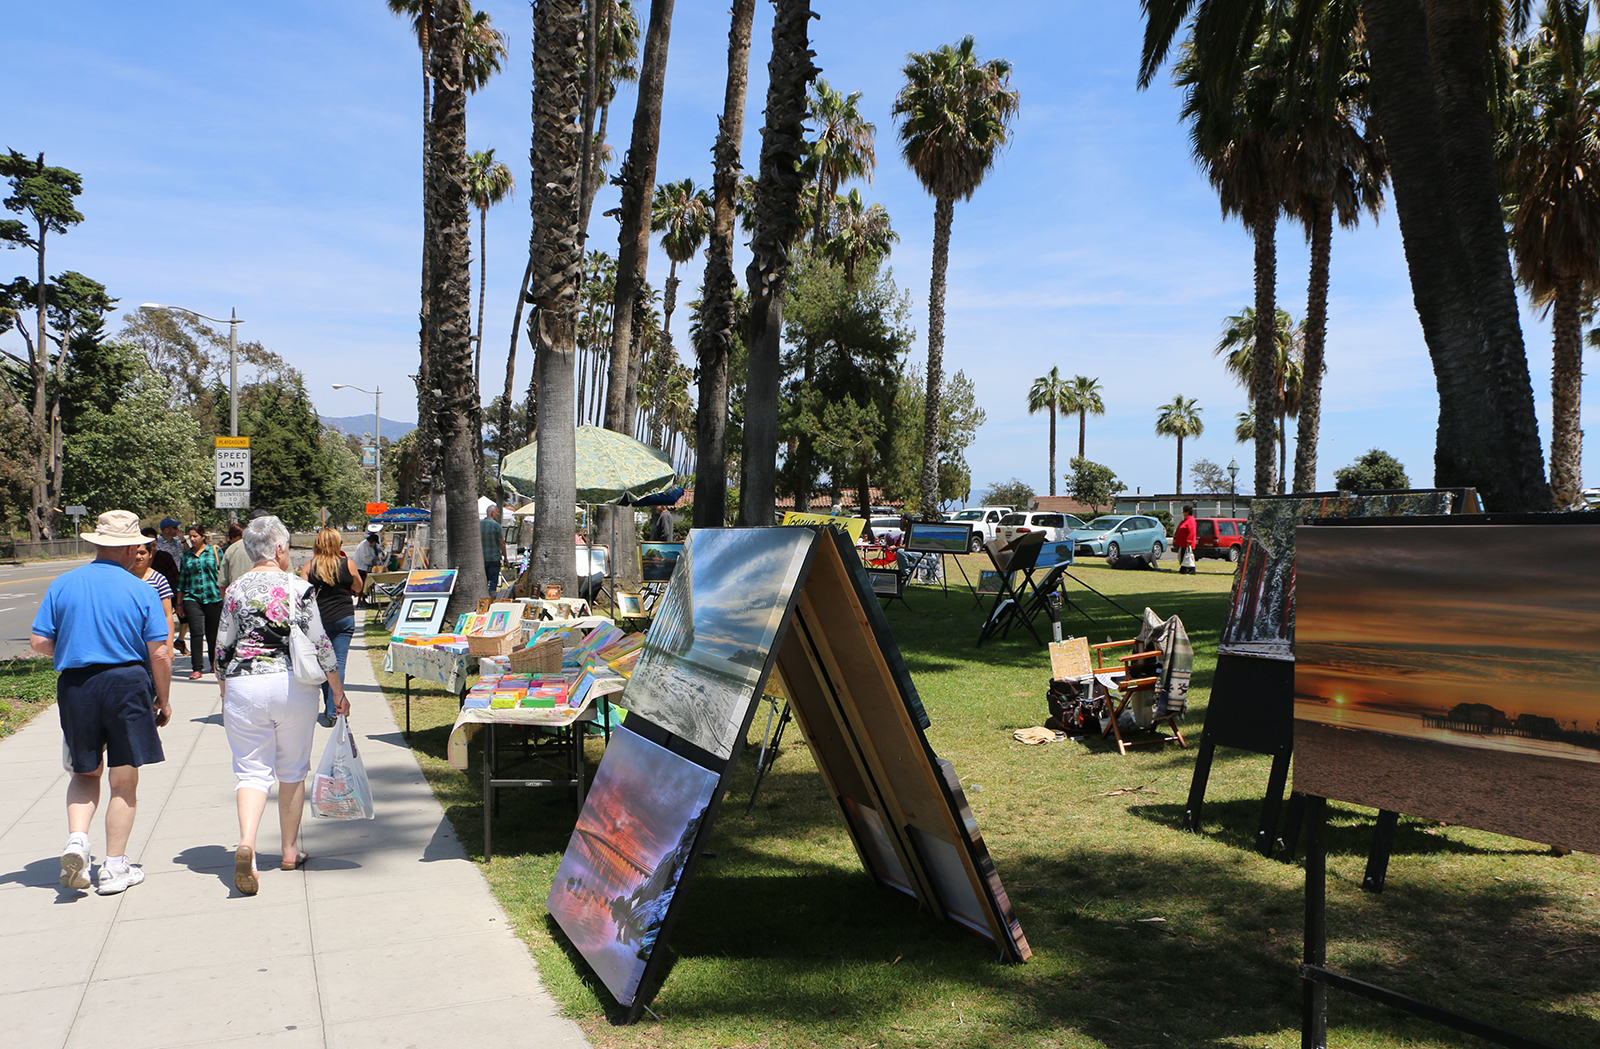 Community members attend the Santa Barbara Arts & Crafts Show along Cabrillo Boulevard.